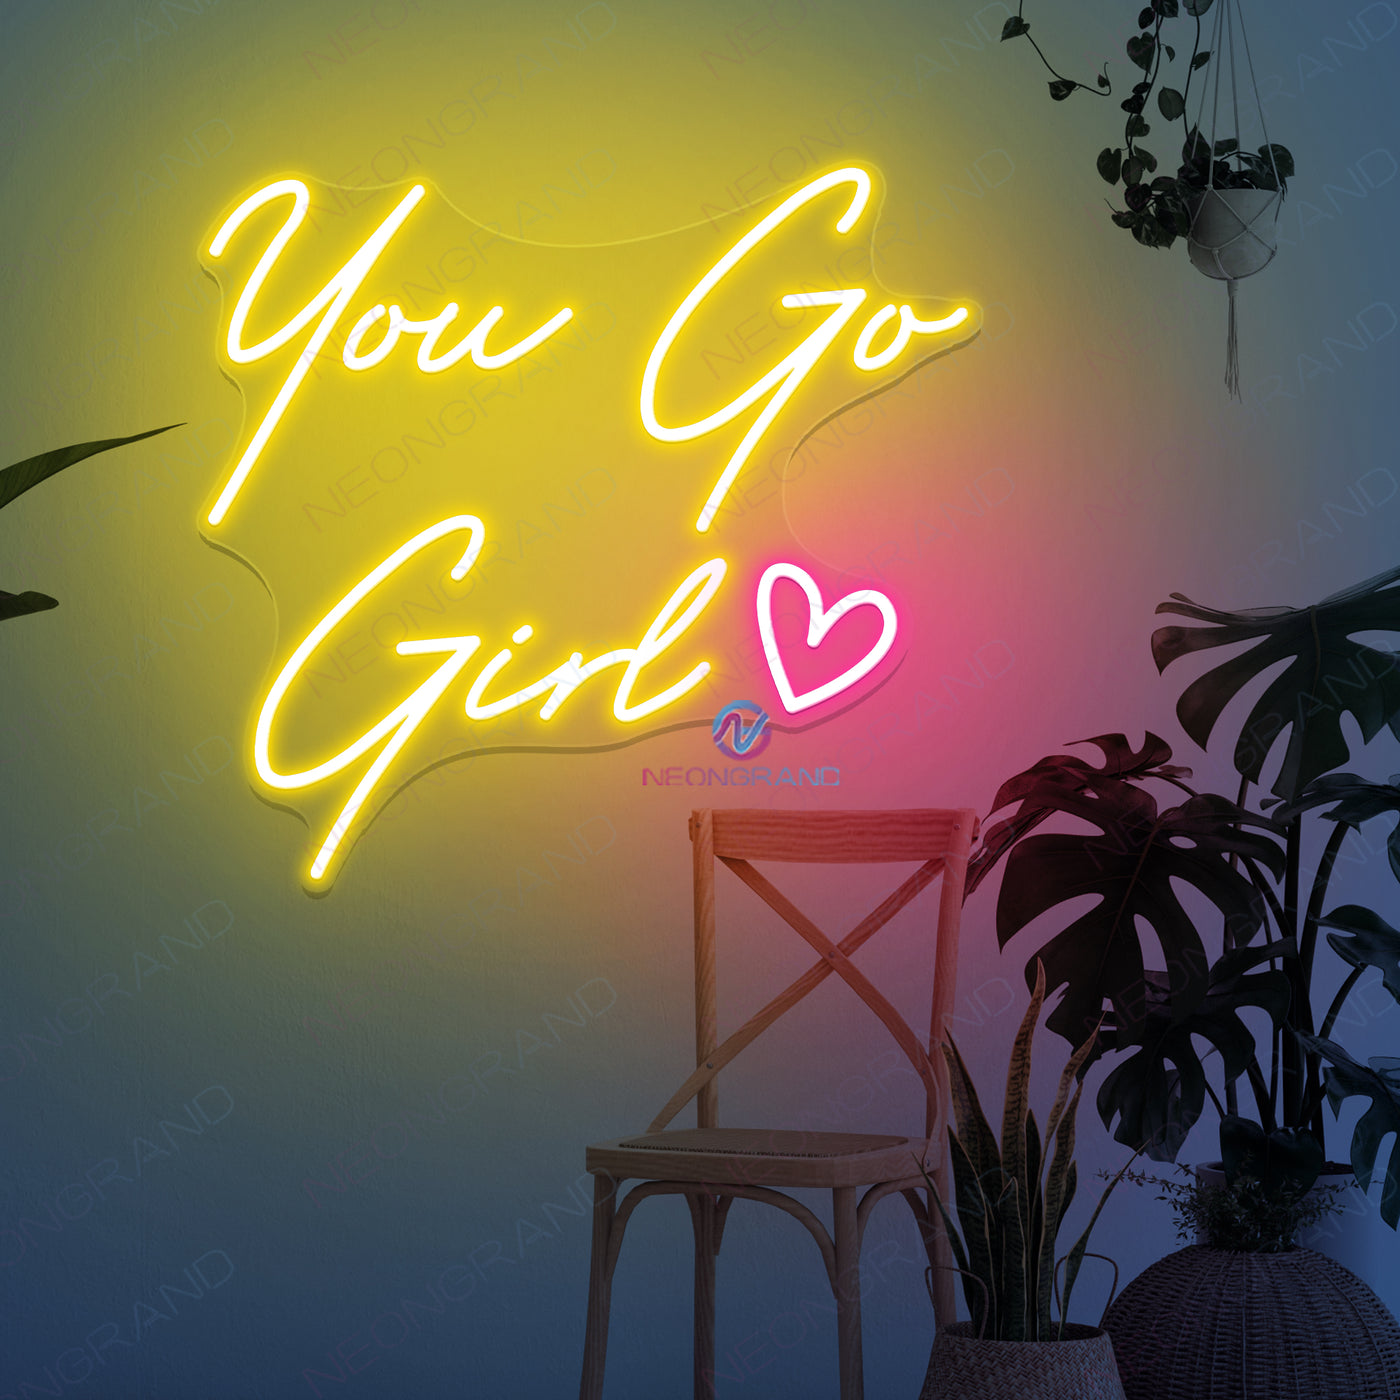 You Go Girl Neon Sign Word Led Light